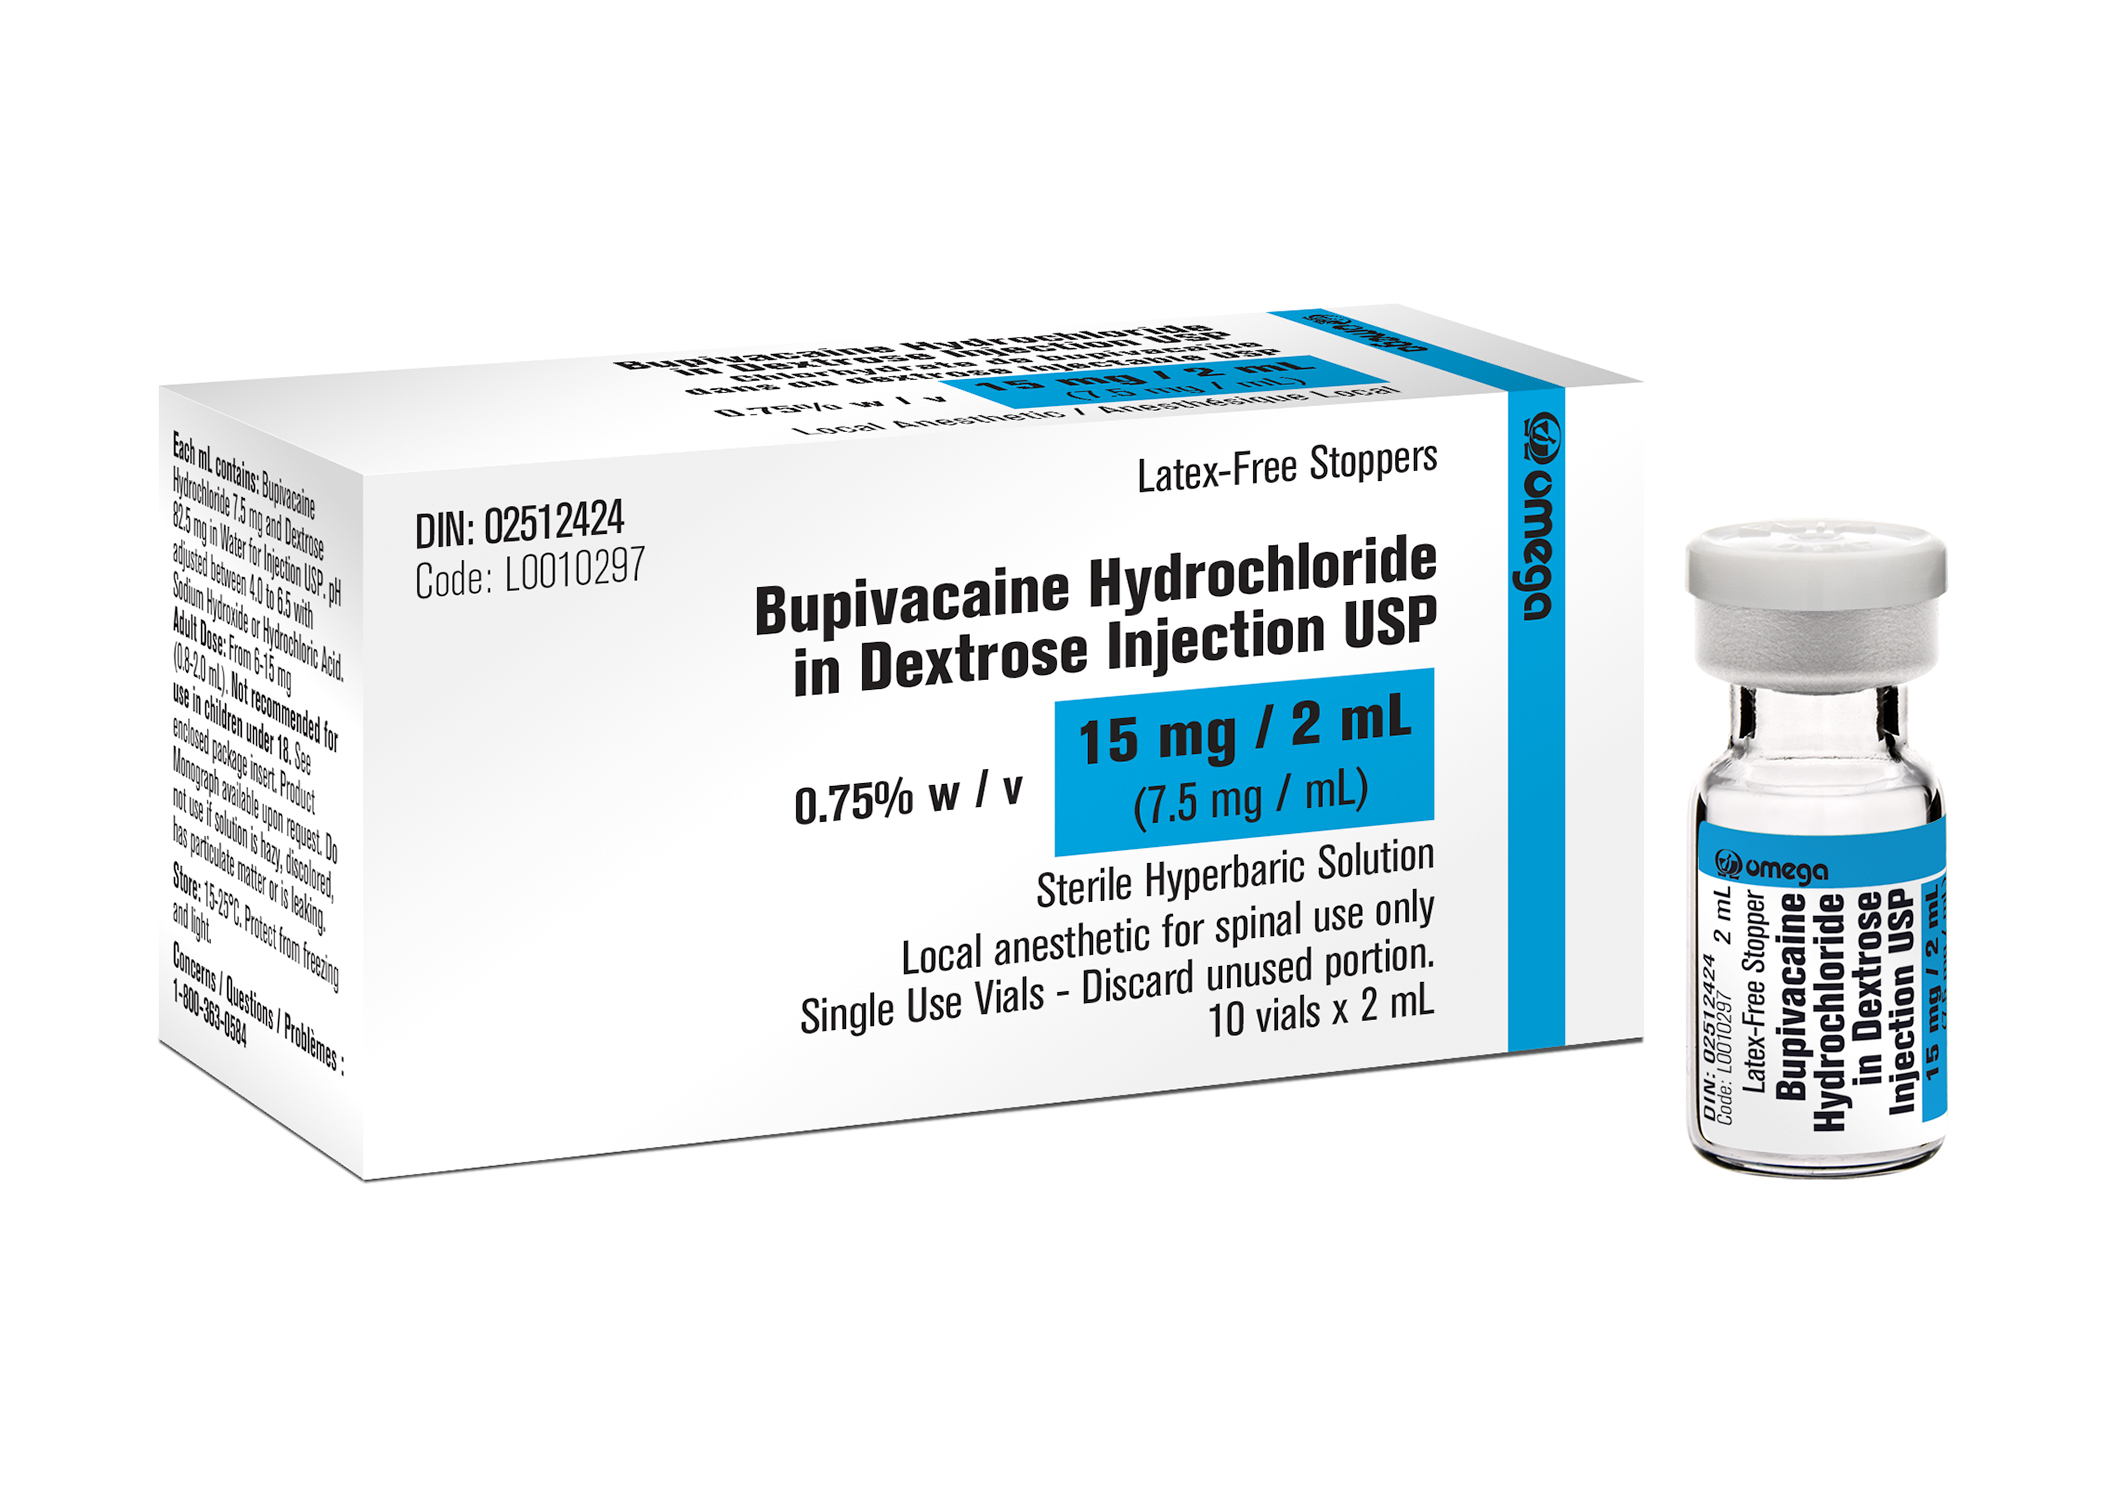 Bupivacaine Hydrochloride in Dextrose Injection USP